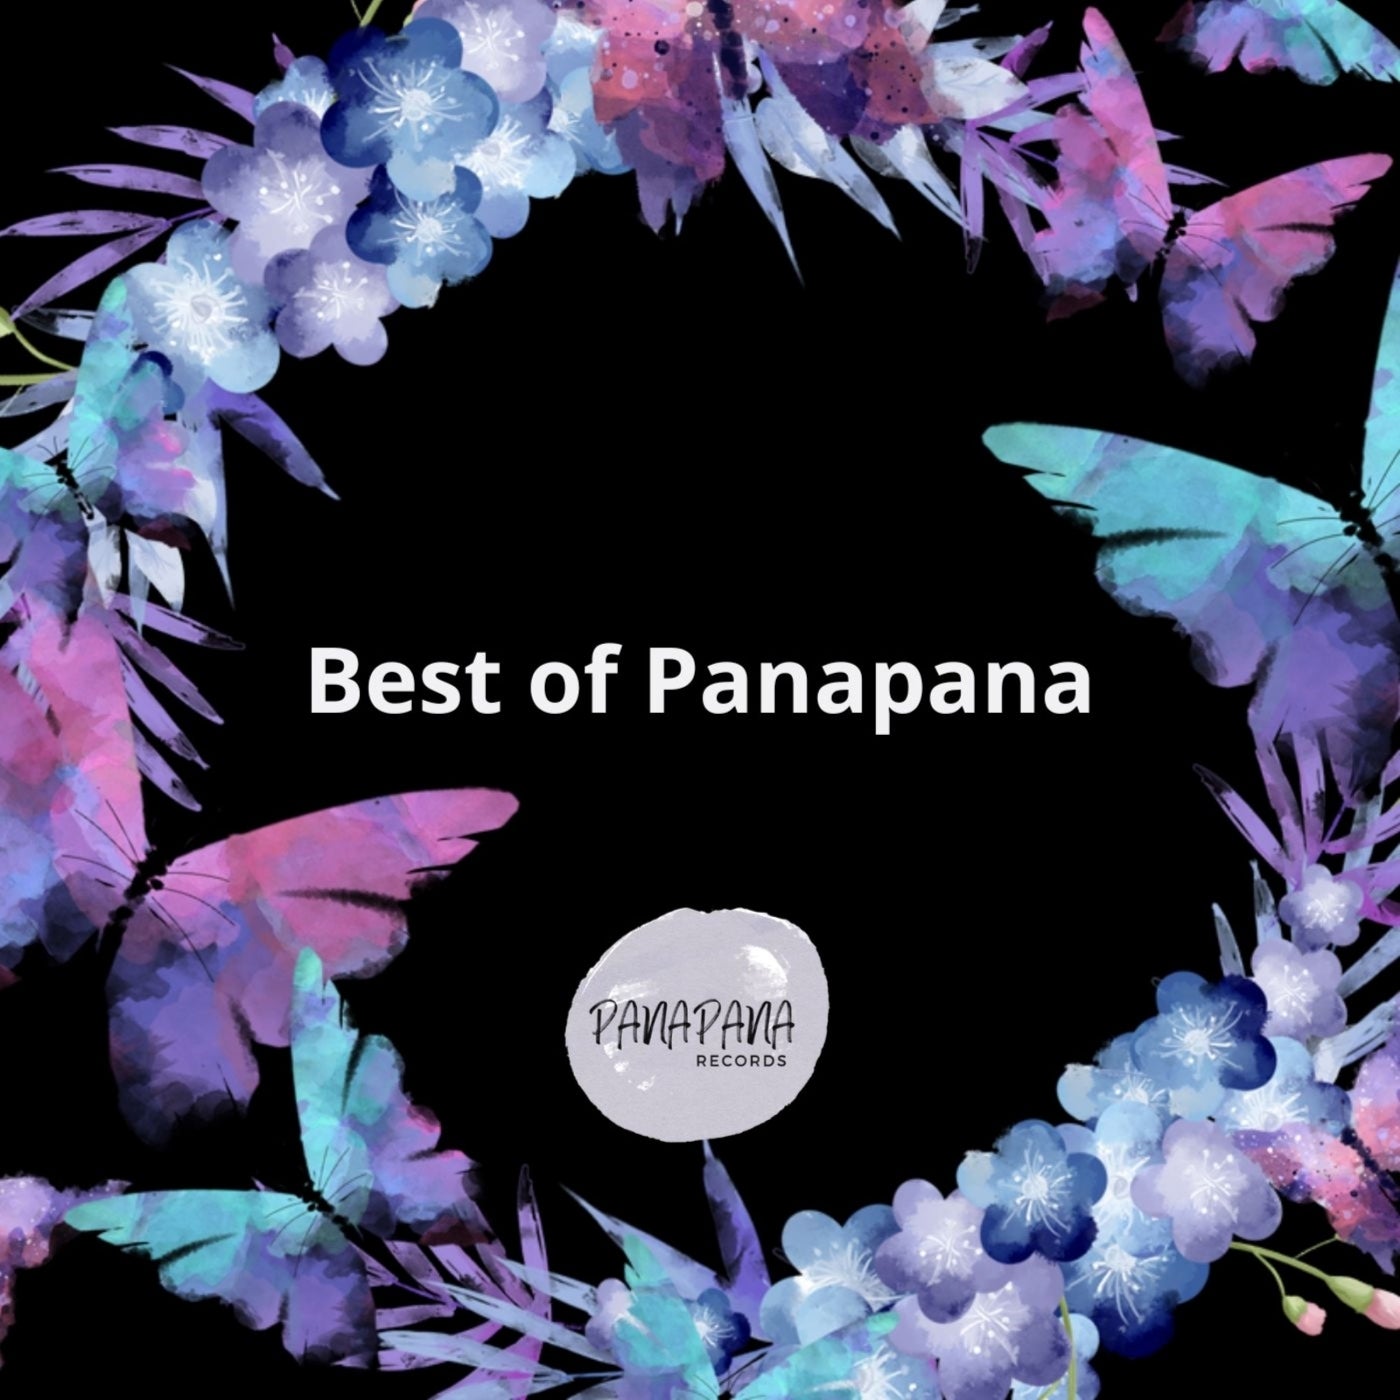 Best of Panapana